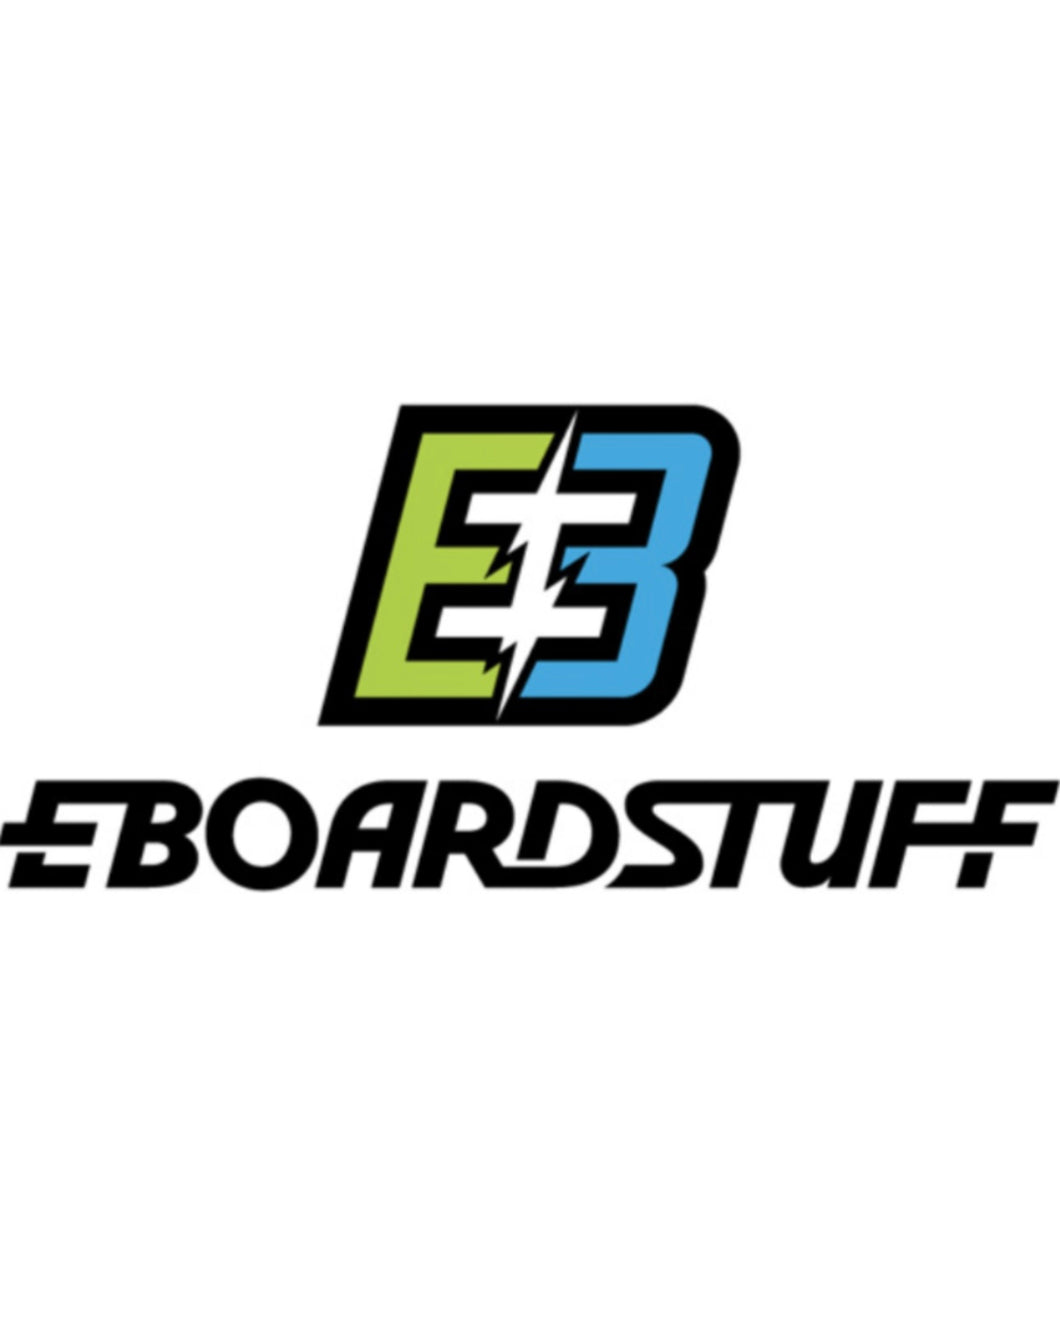 eBoardStuff Gift Card